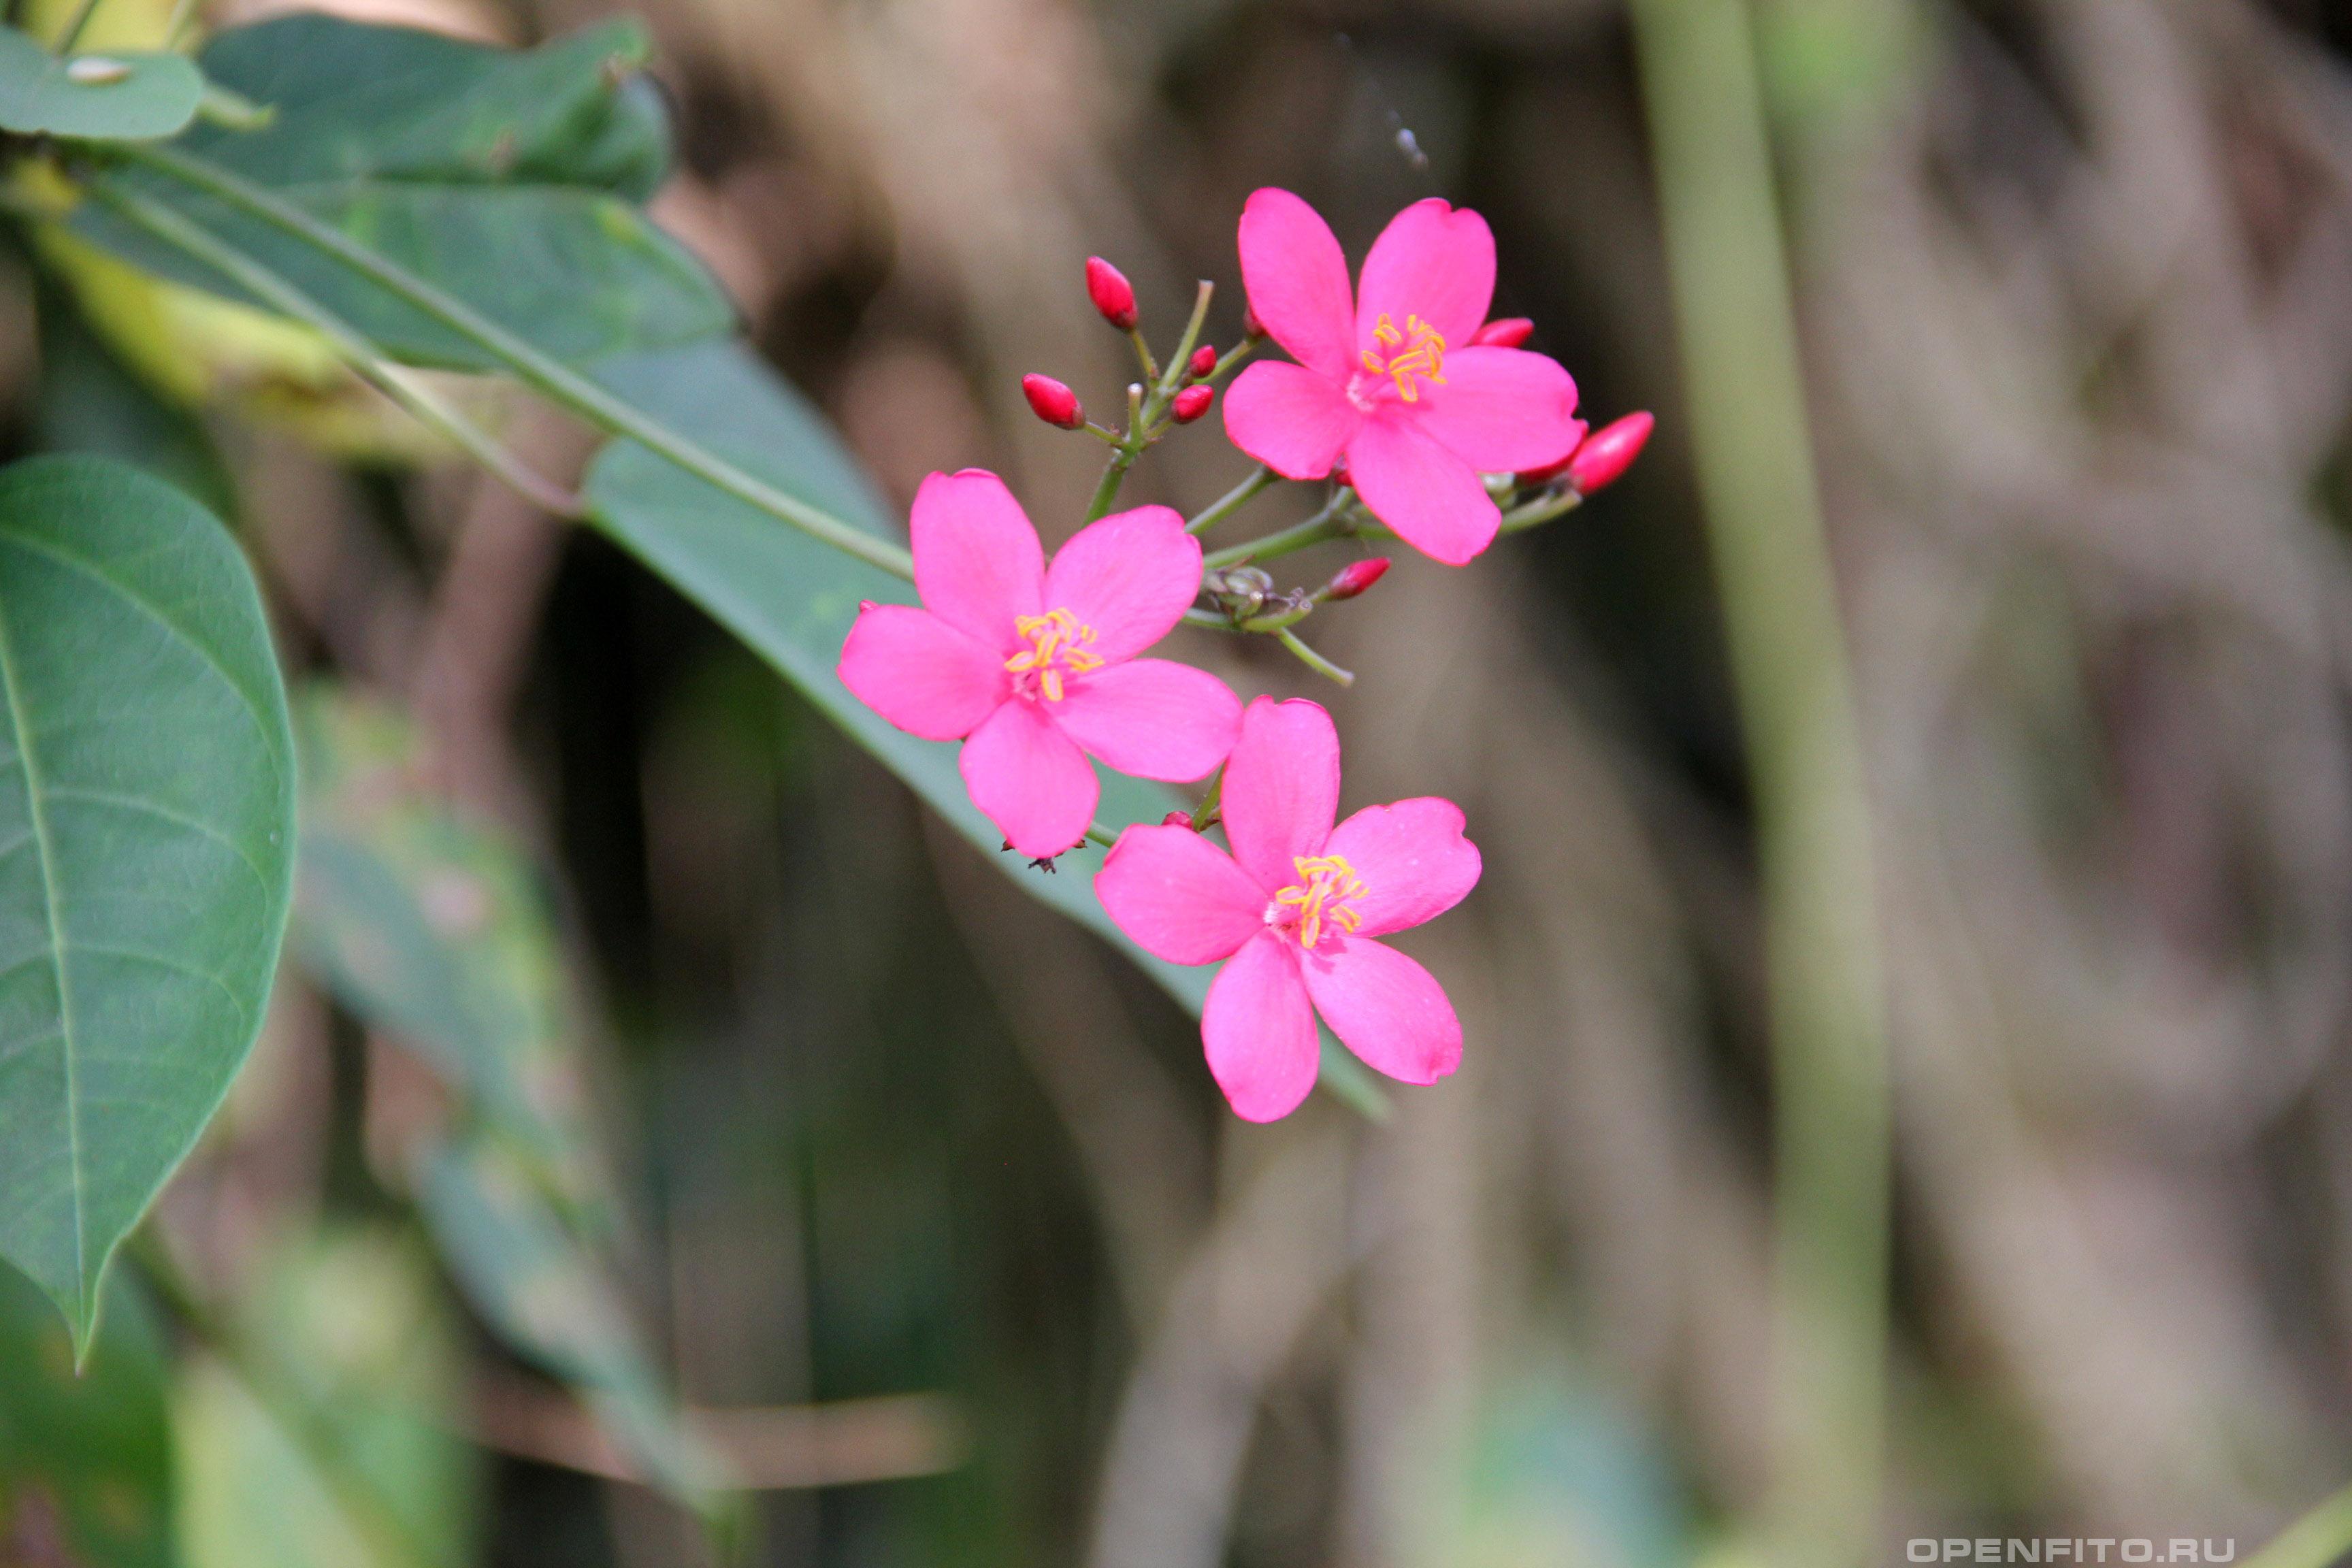 Ятрофа цельнокрайняя - фотография цветка